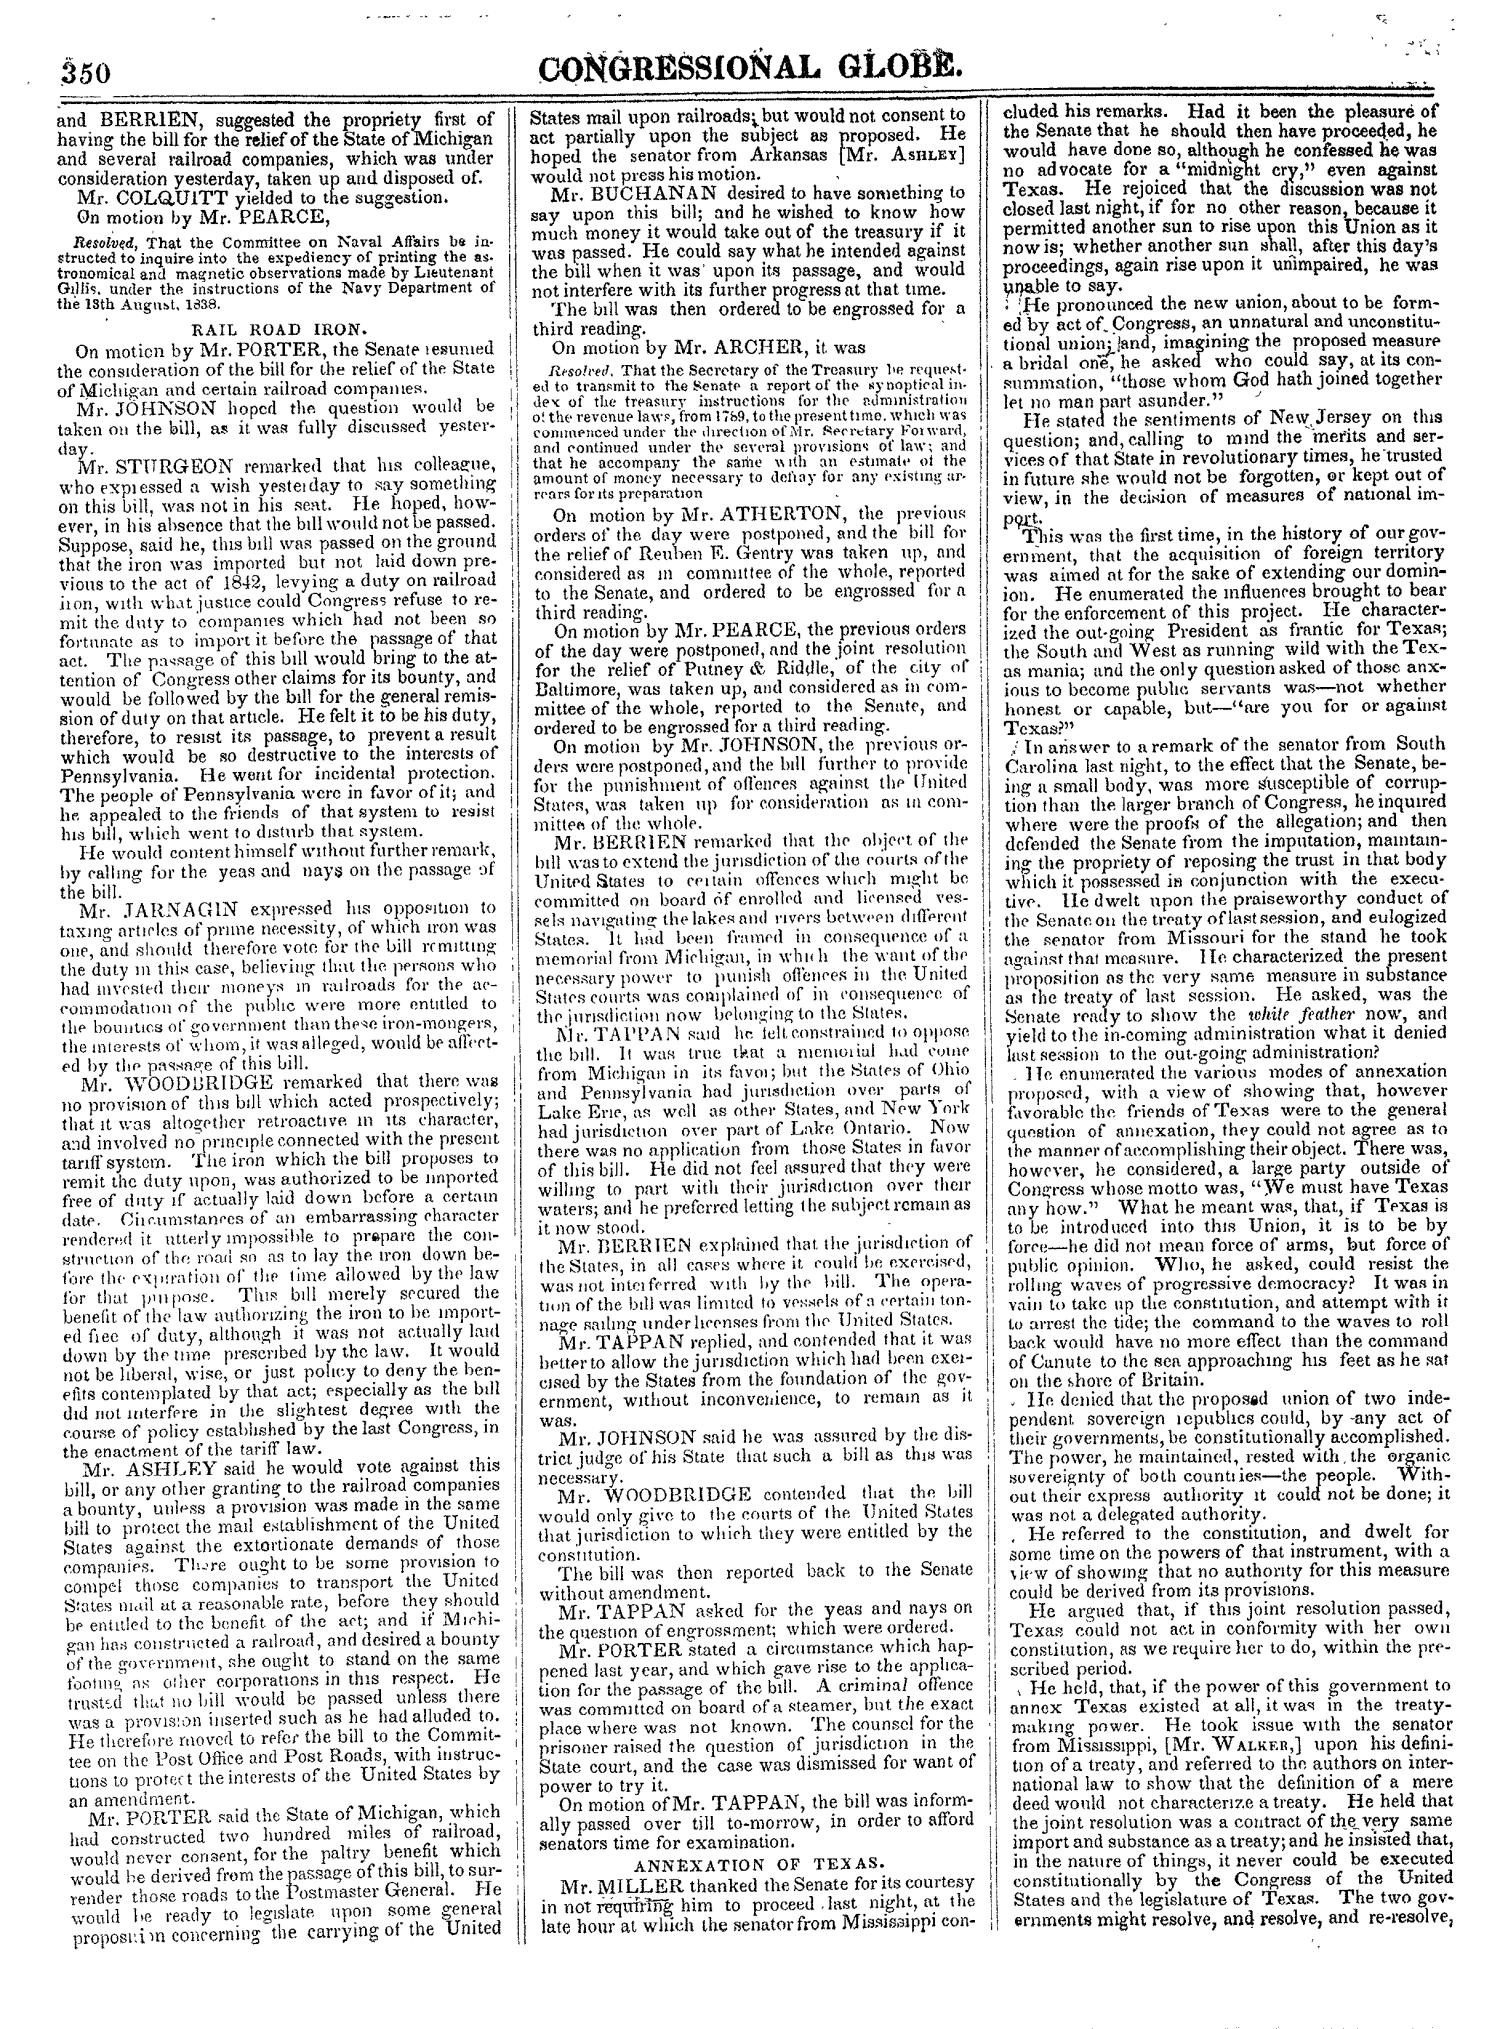 The Congressional Globe, Volume 14: Twenty-Eighth Congress, Second Session
                                                
                                                    350
                                                